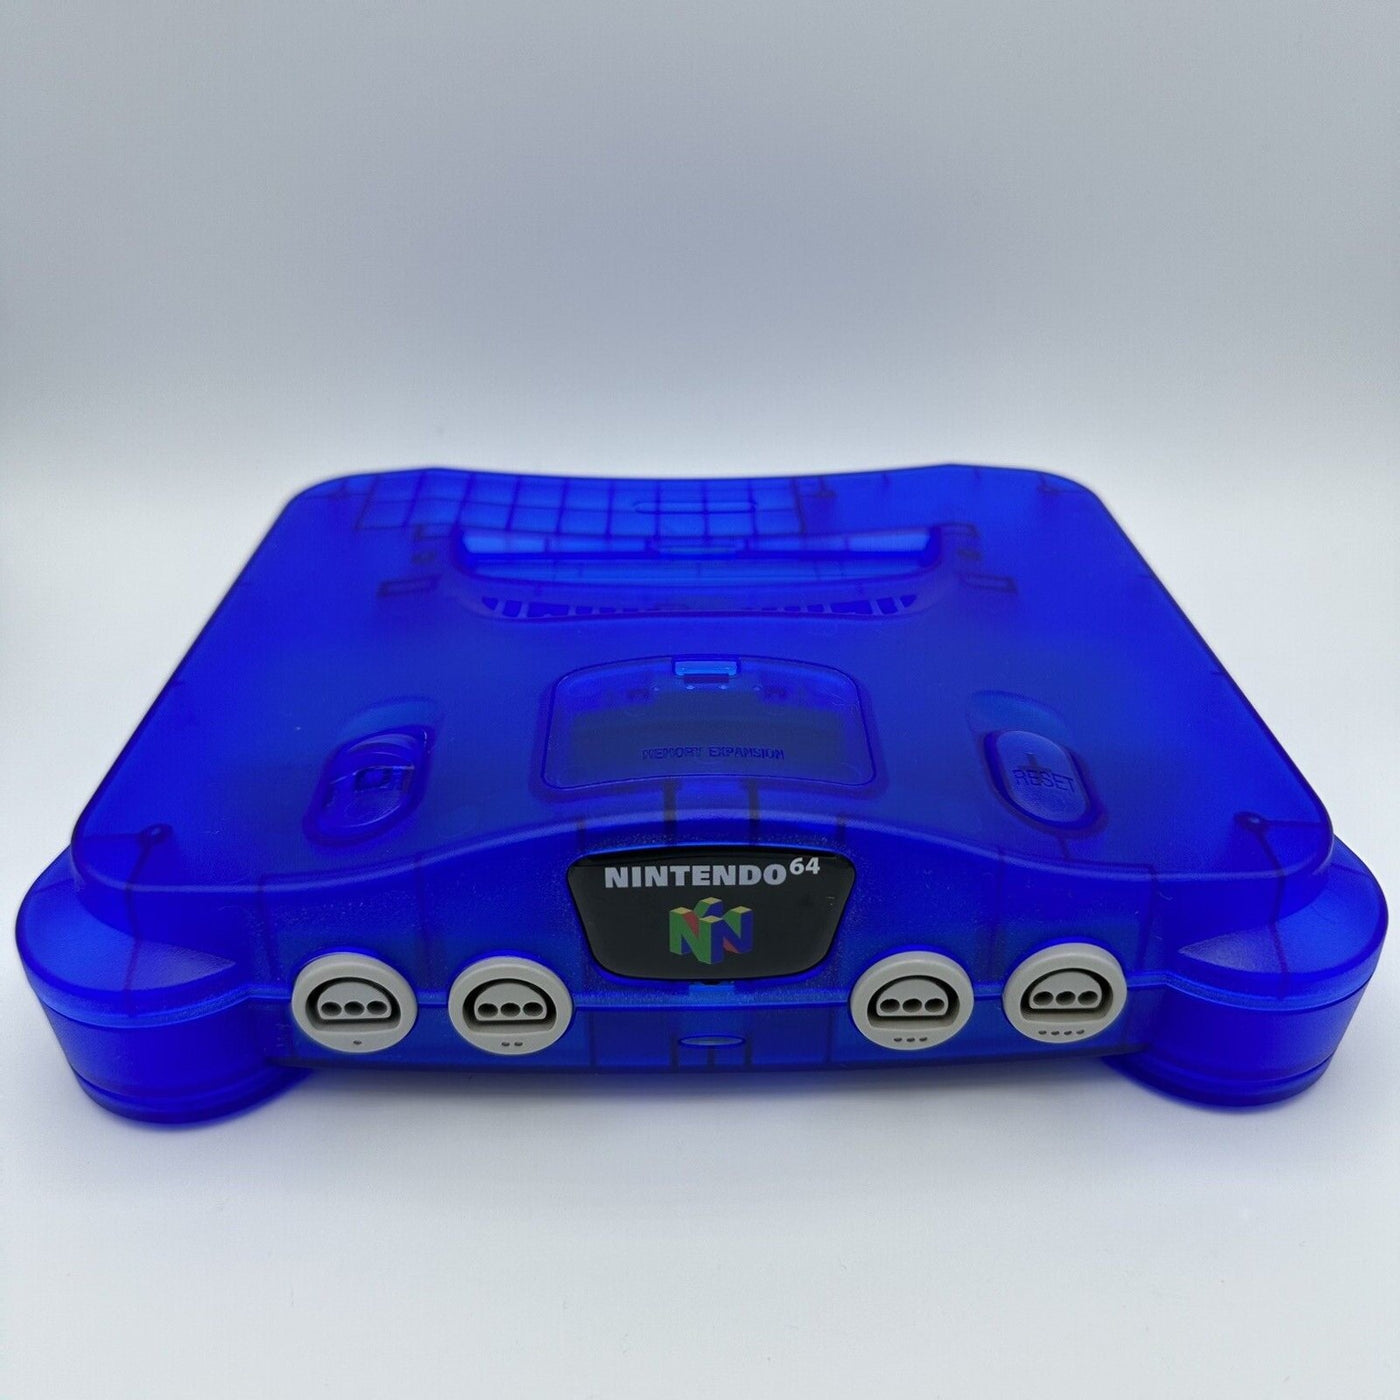 Nintendo 64 Console - Transparent Ocean Blue